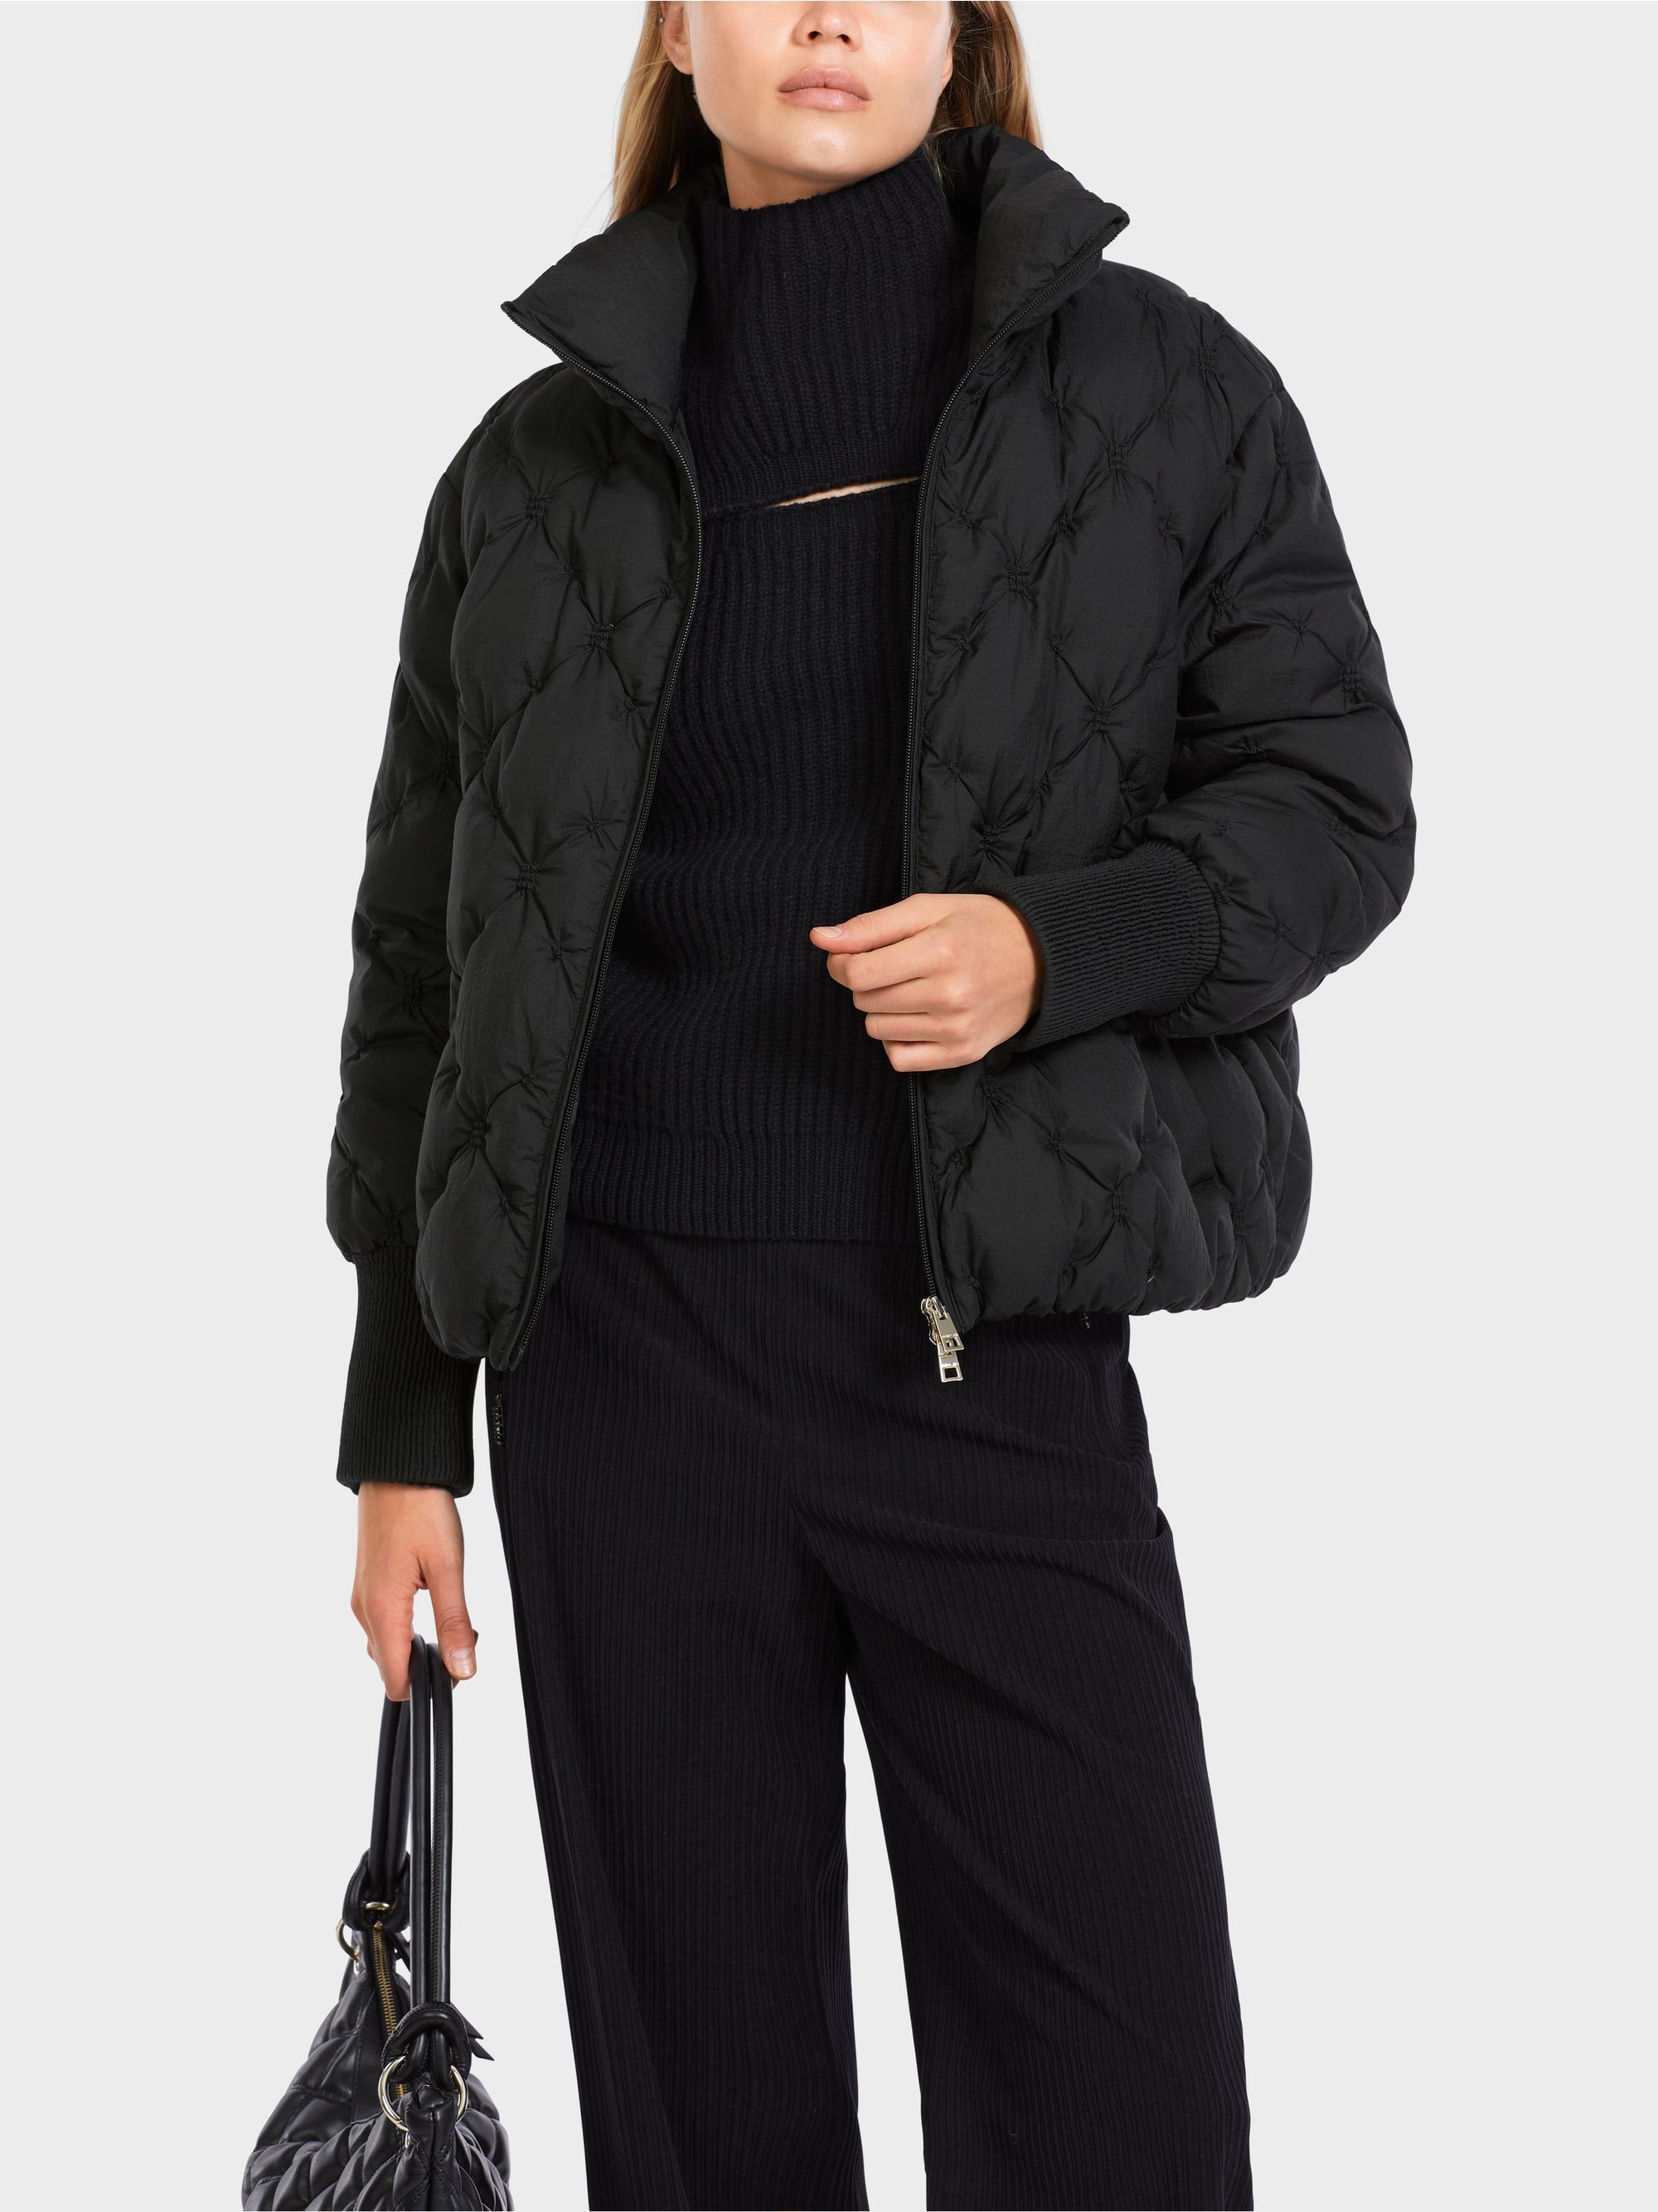 Crop jacket with storm flap